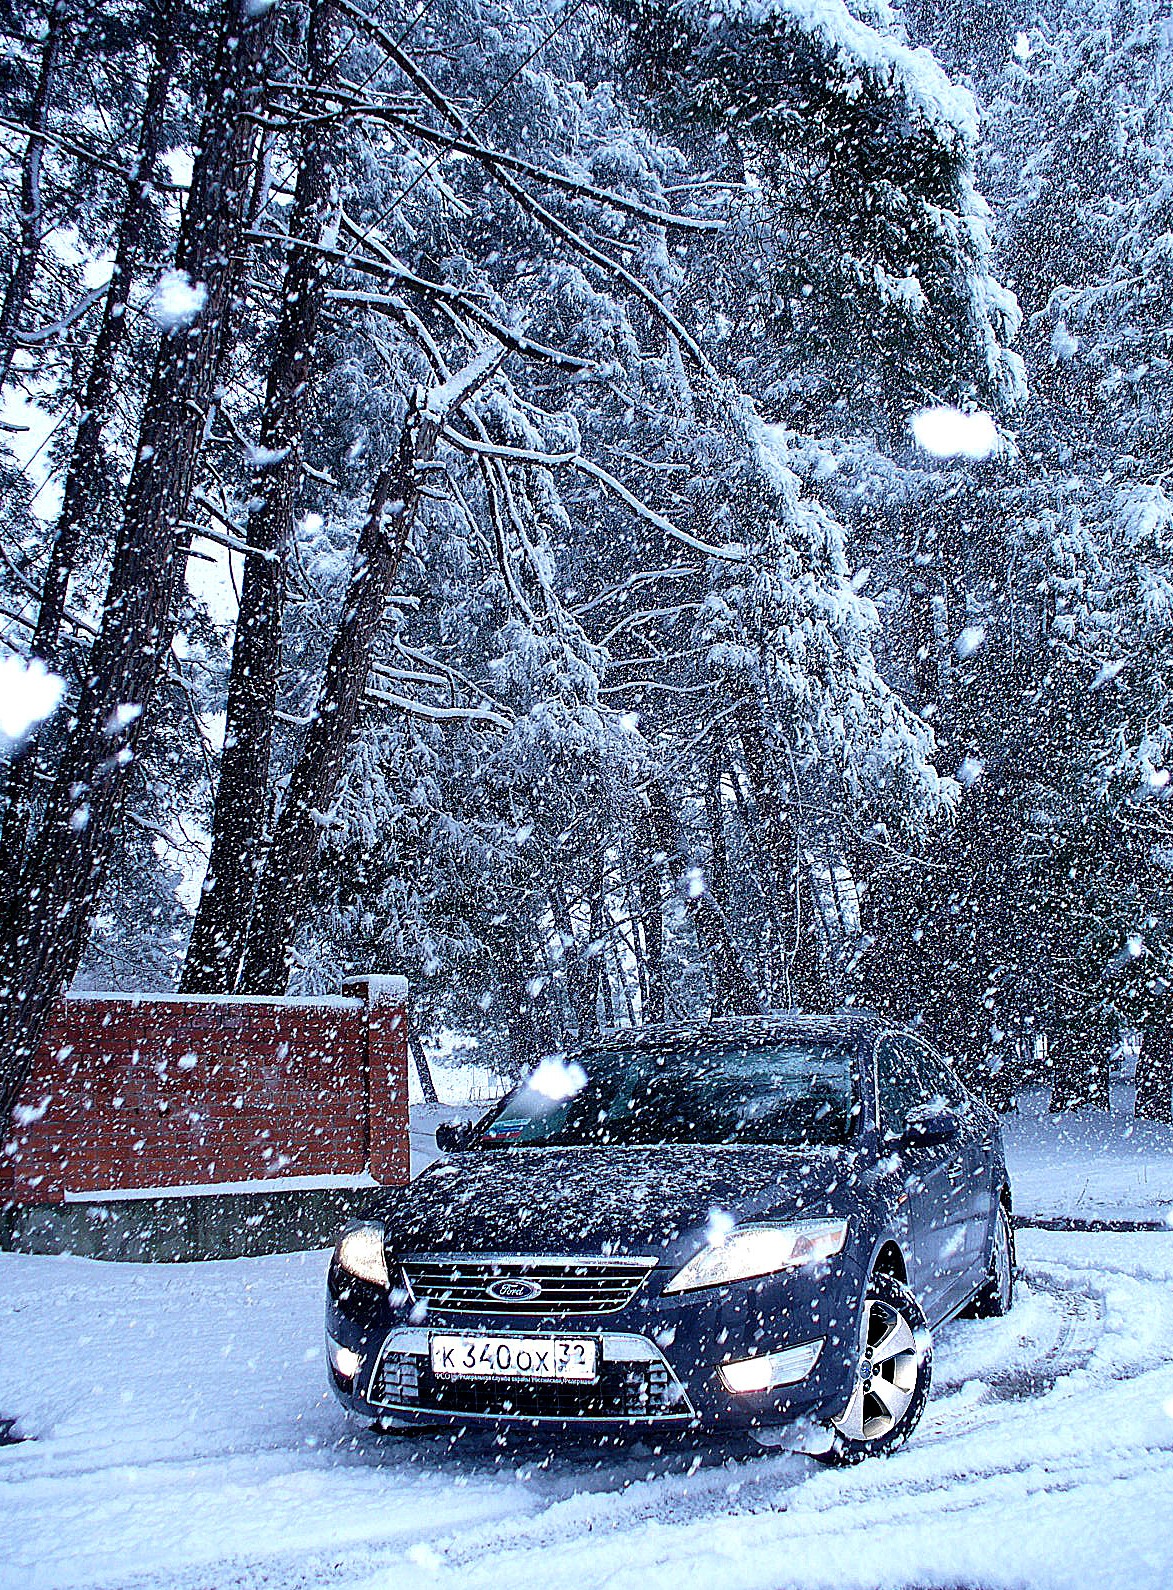 Правда будет снег. Форд снегу. Машина Форд в снегу. Форд Мондео под снегом. St Форд в снегу.